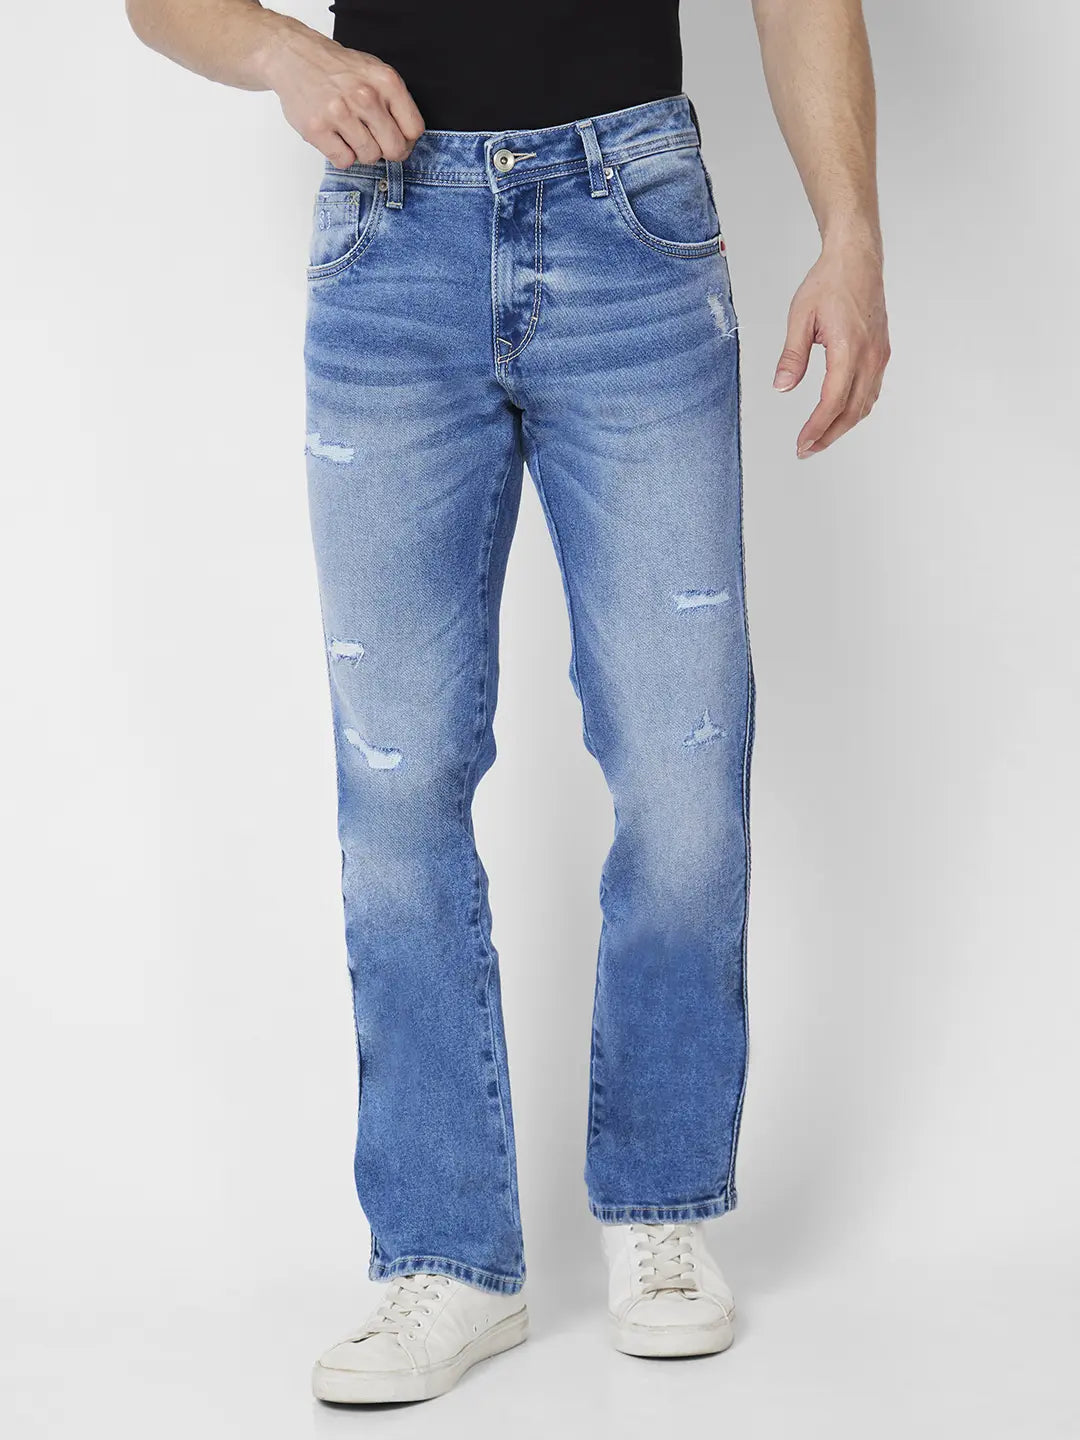 Lu's Chic Men's Distressed Jeans Slim Fit Pants Mid Rise Trousers Denim  Ripped Chic Denim Jeggings Grey 34 - Walmart.com